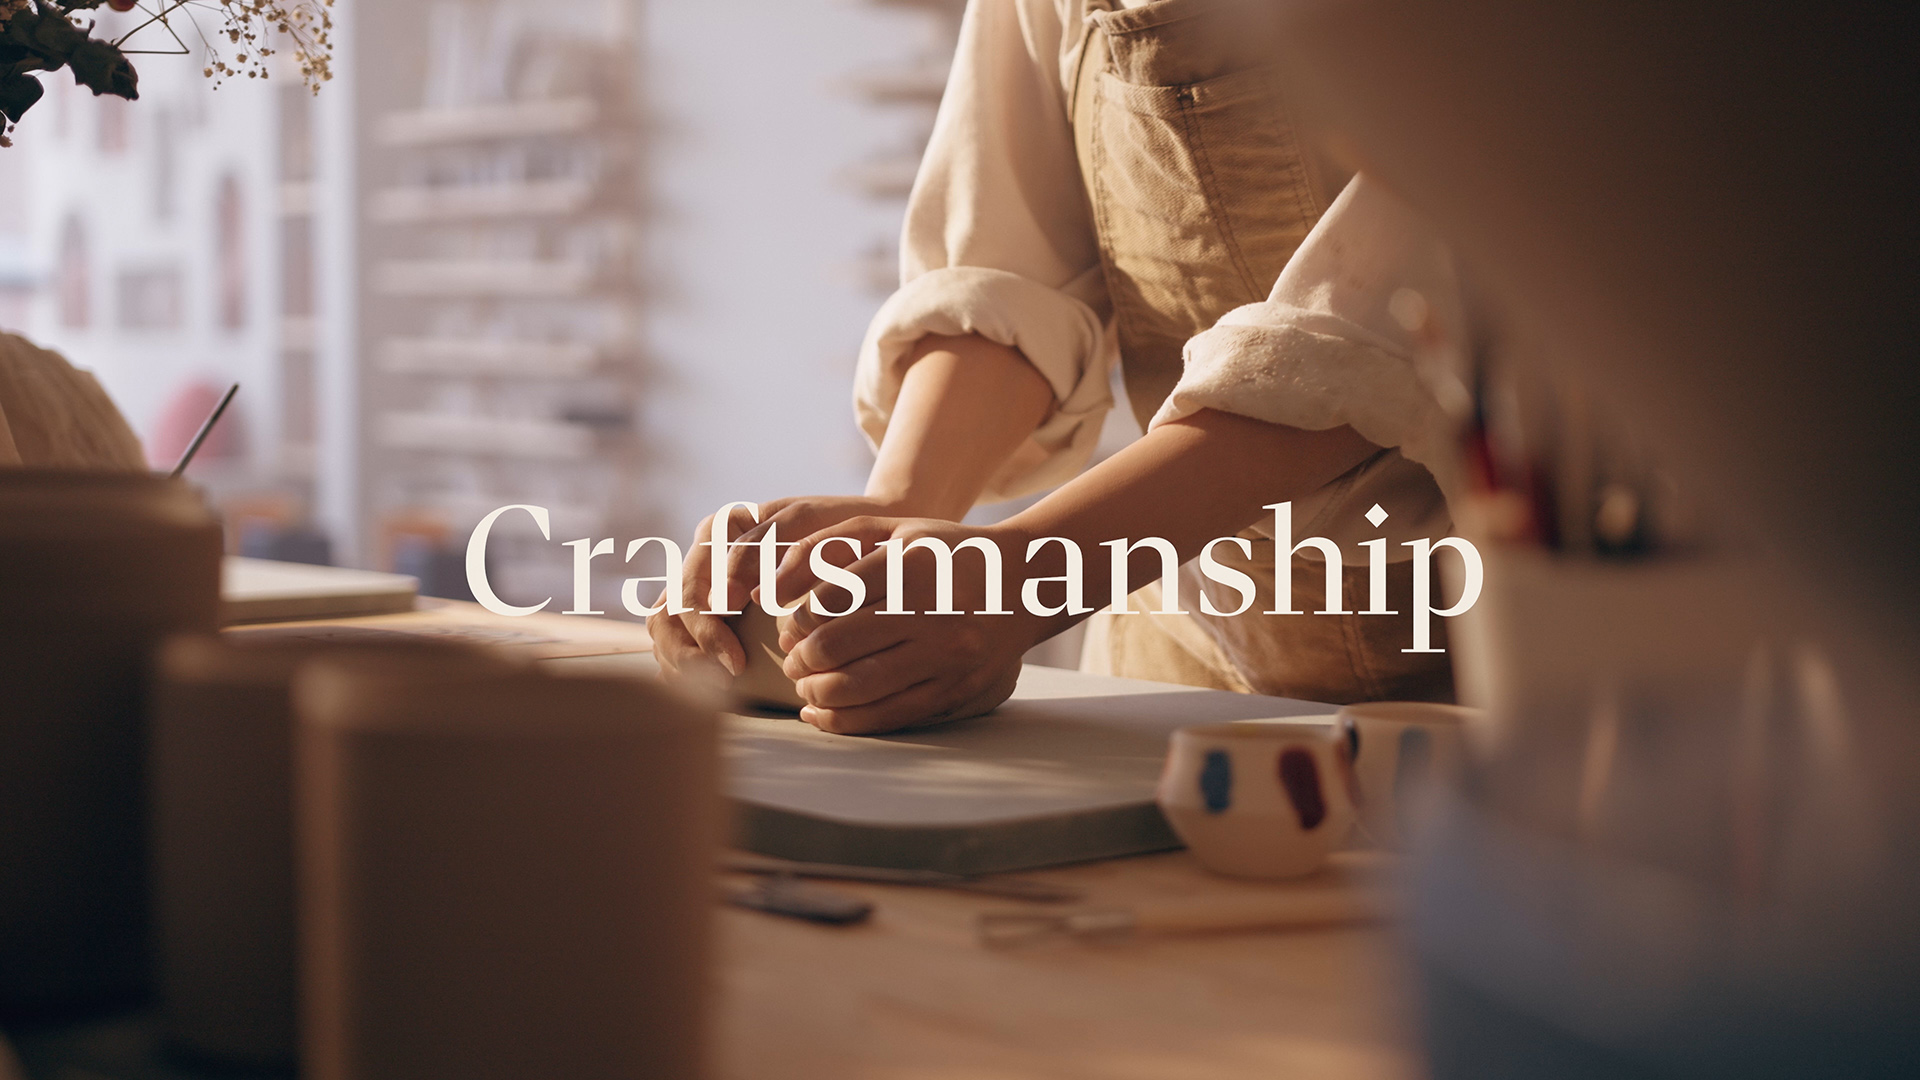 Craftsmanship and artisanal production in Saudi Arabia